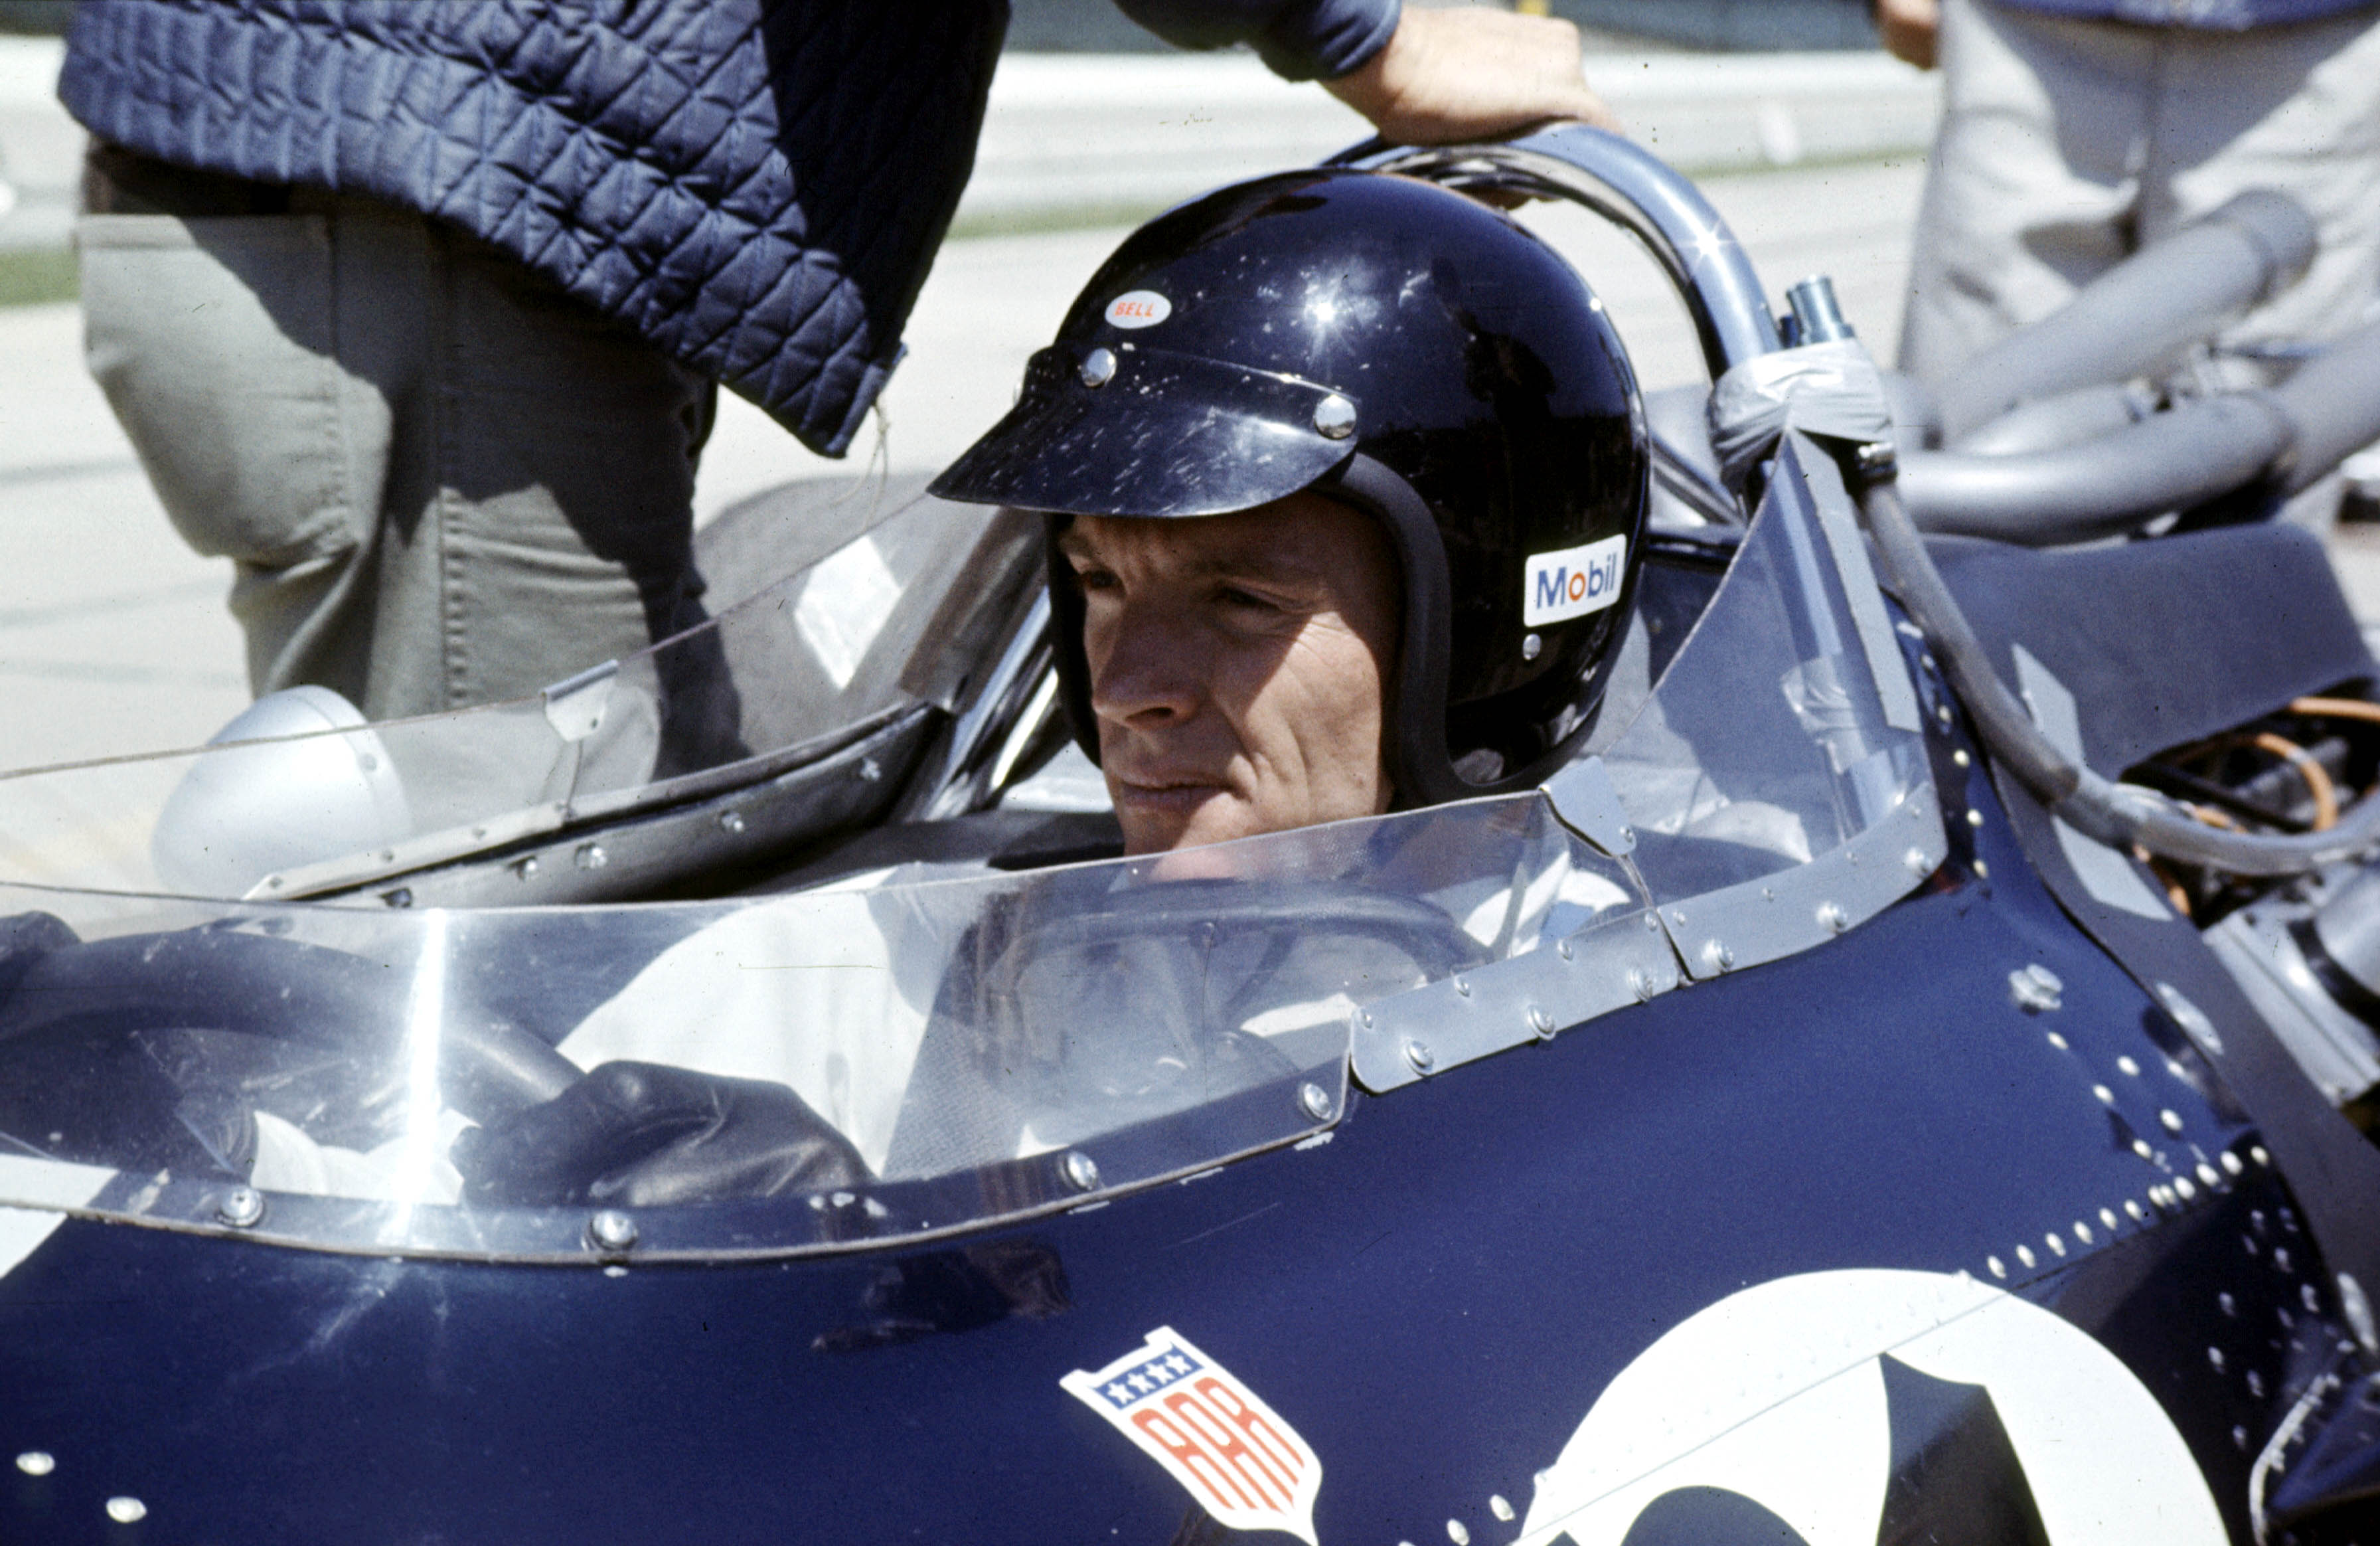 Dan Gurney: A life in motorsport